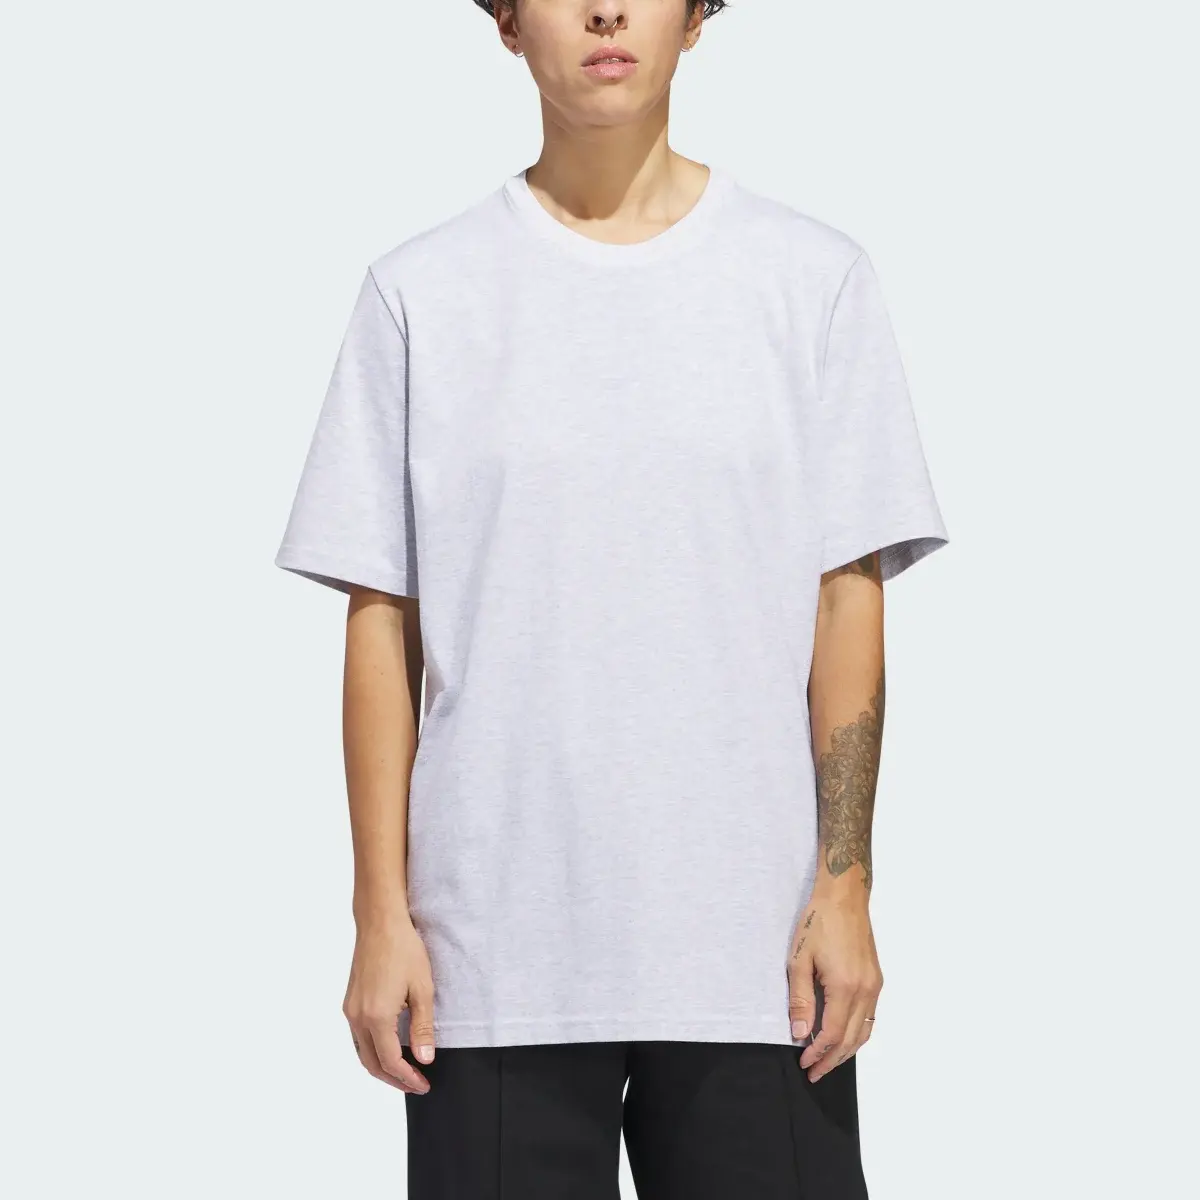 Adidas T-shirt Henry Jones Tyshawn Short Sleeve. 1